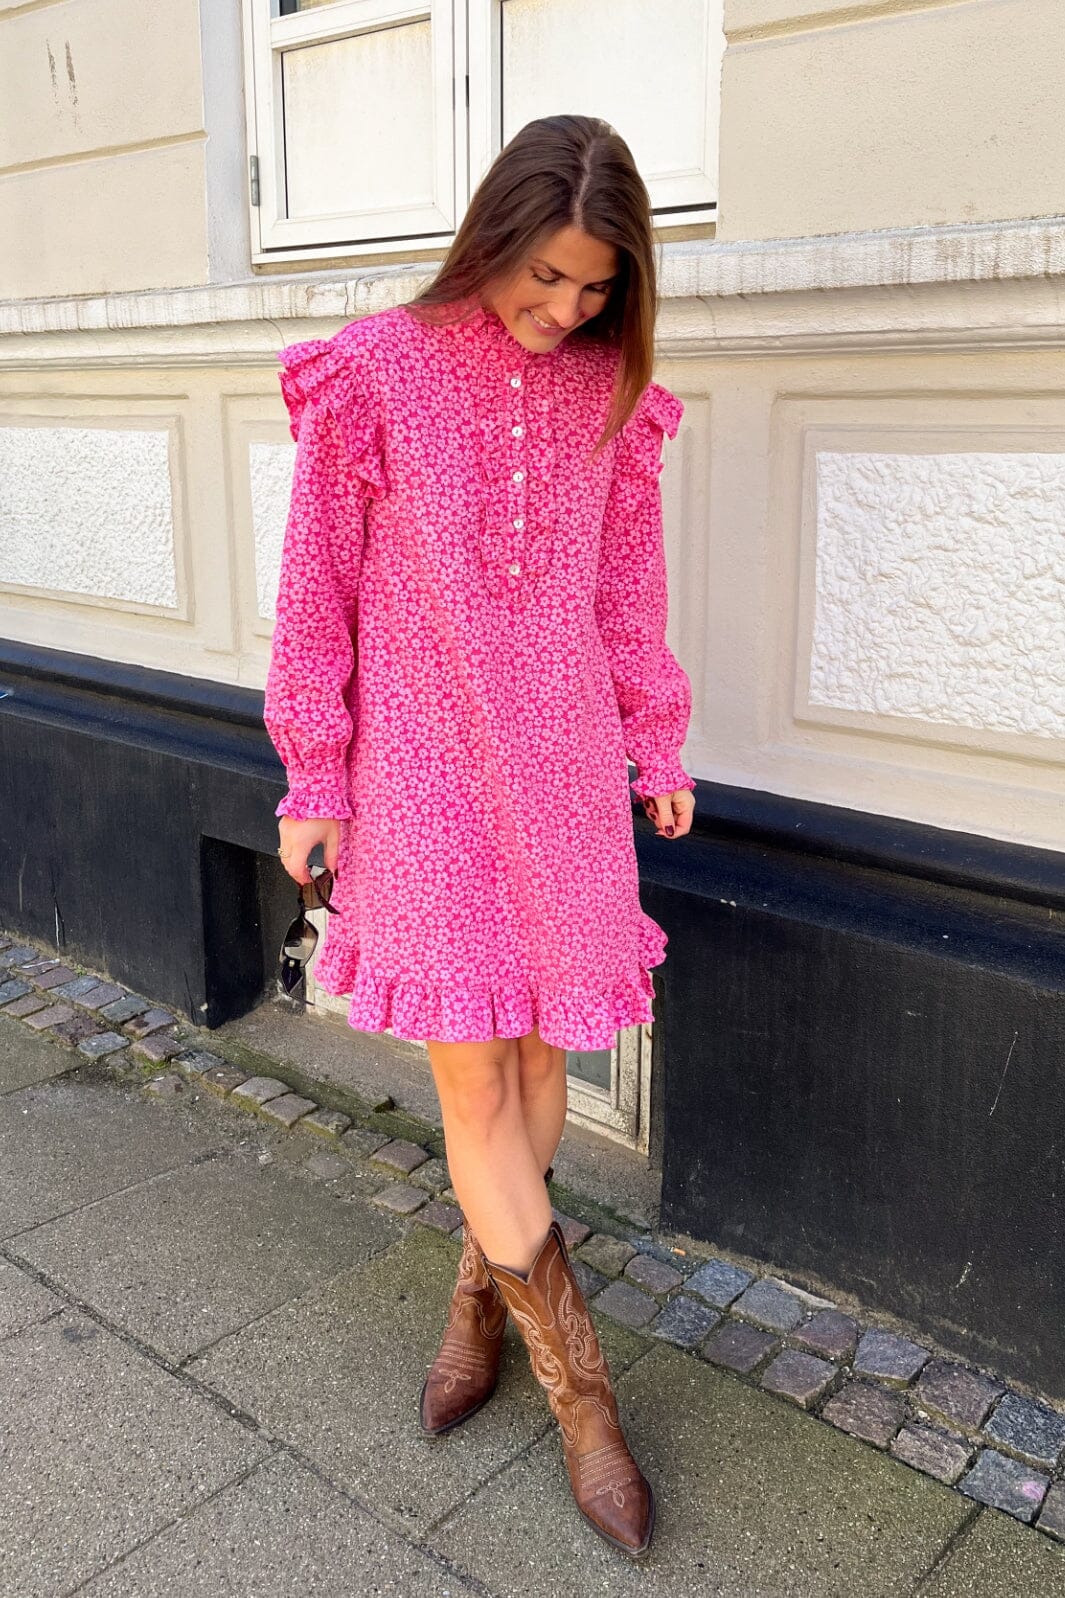 Forudbestilling - Noella - Reno Ruby Ruffle Dress - 031 Bright Pink Kjoler 